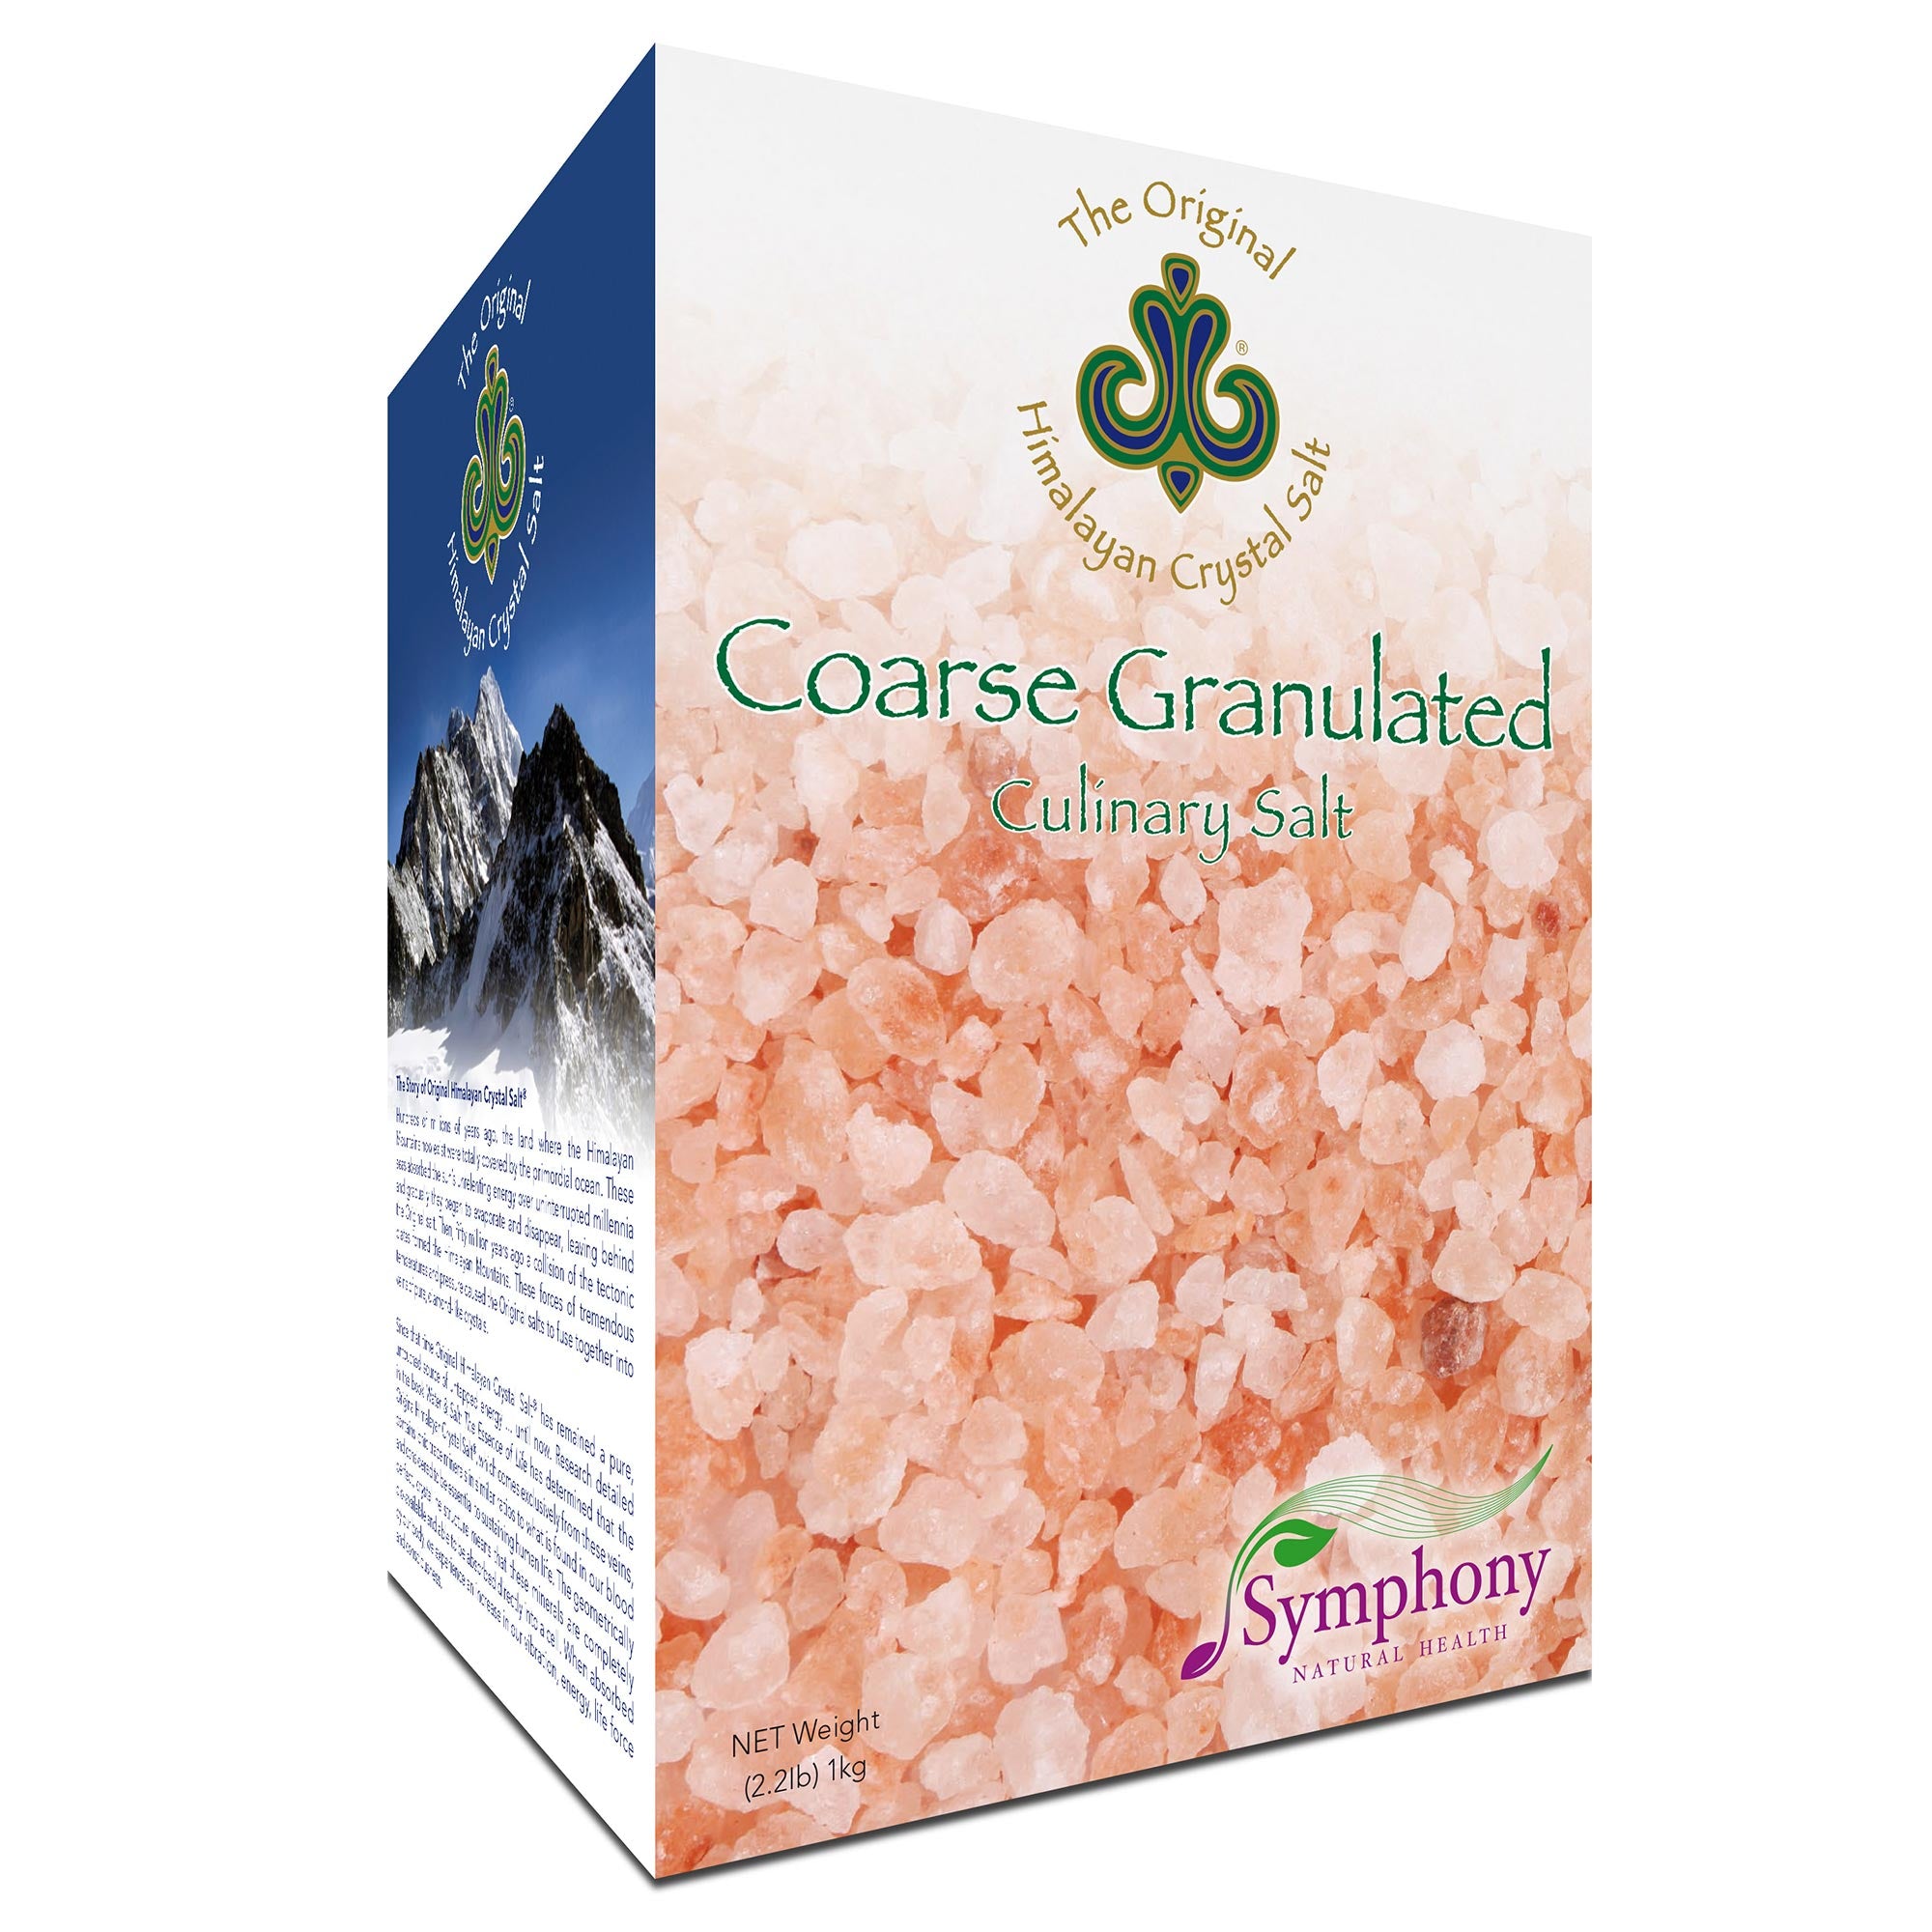 Coarse Granulated Culinary Salt product box right-facing with Himalayan Crystal Salt coarse granulated salt and Himalayan Crystal Salt logo